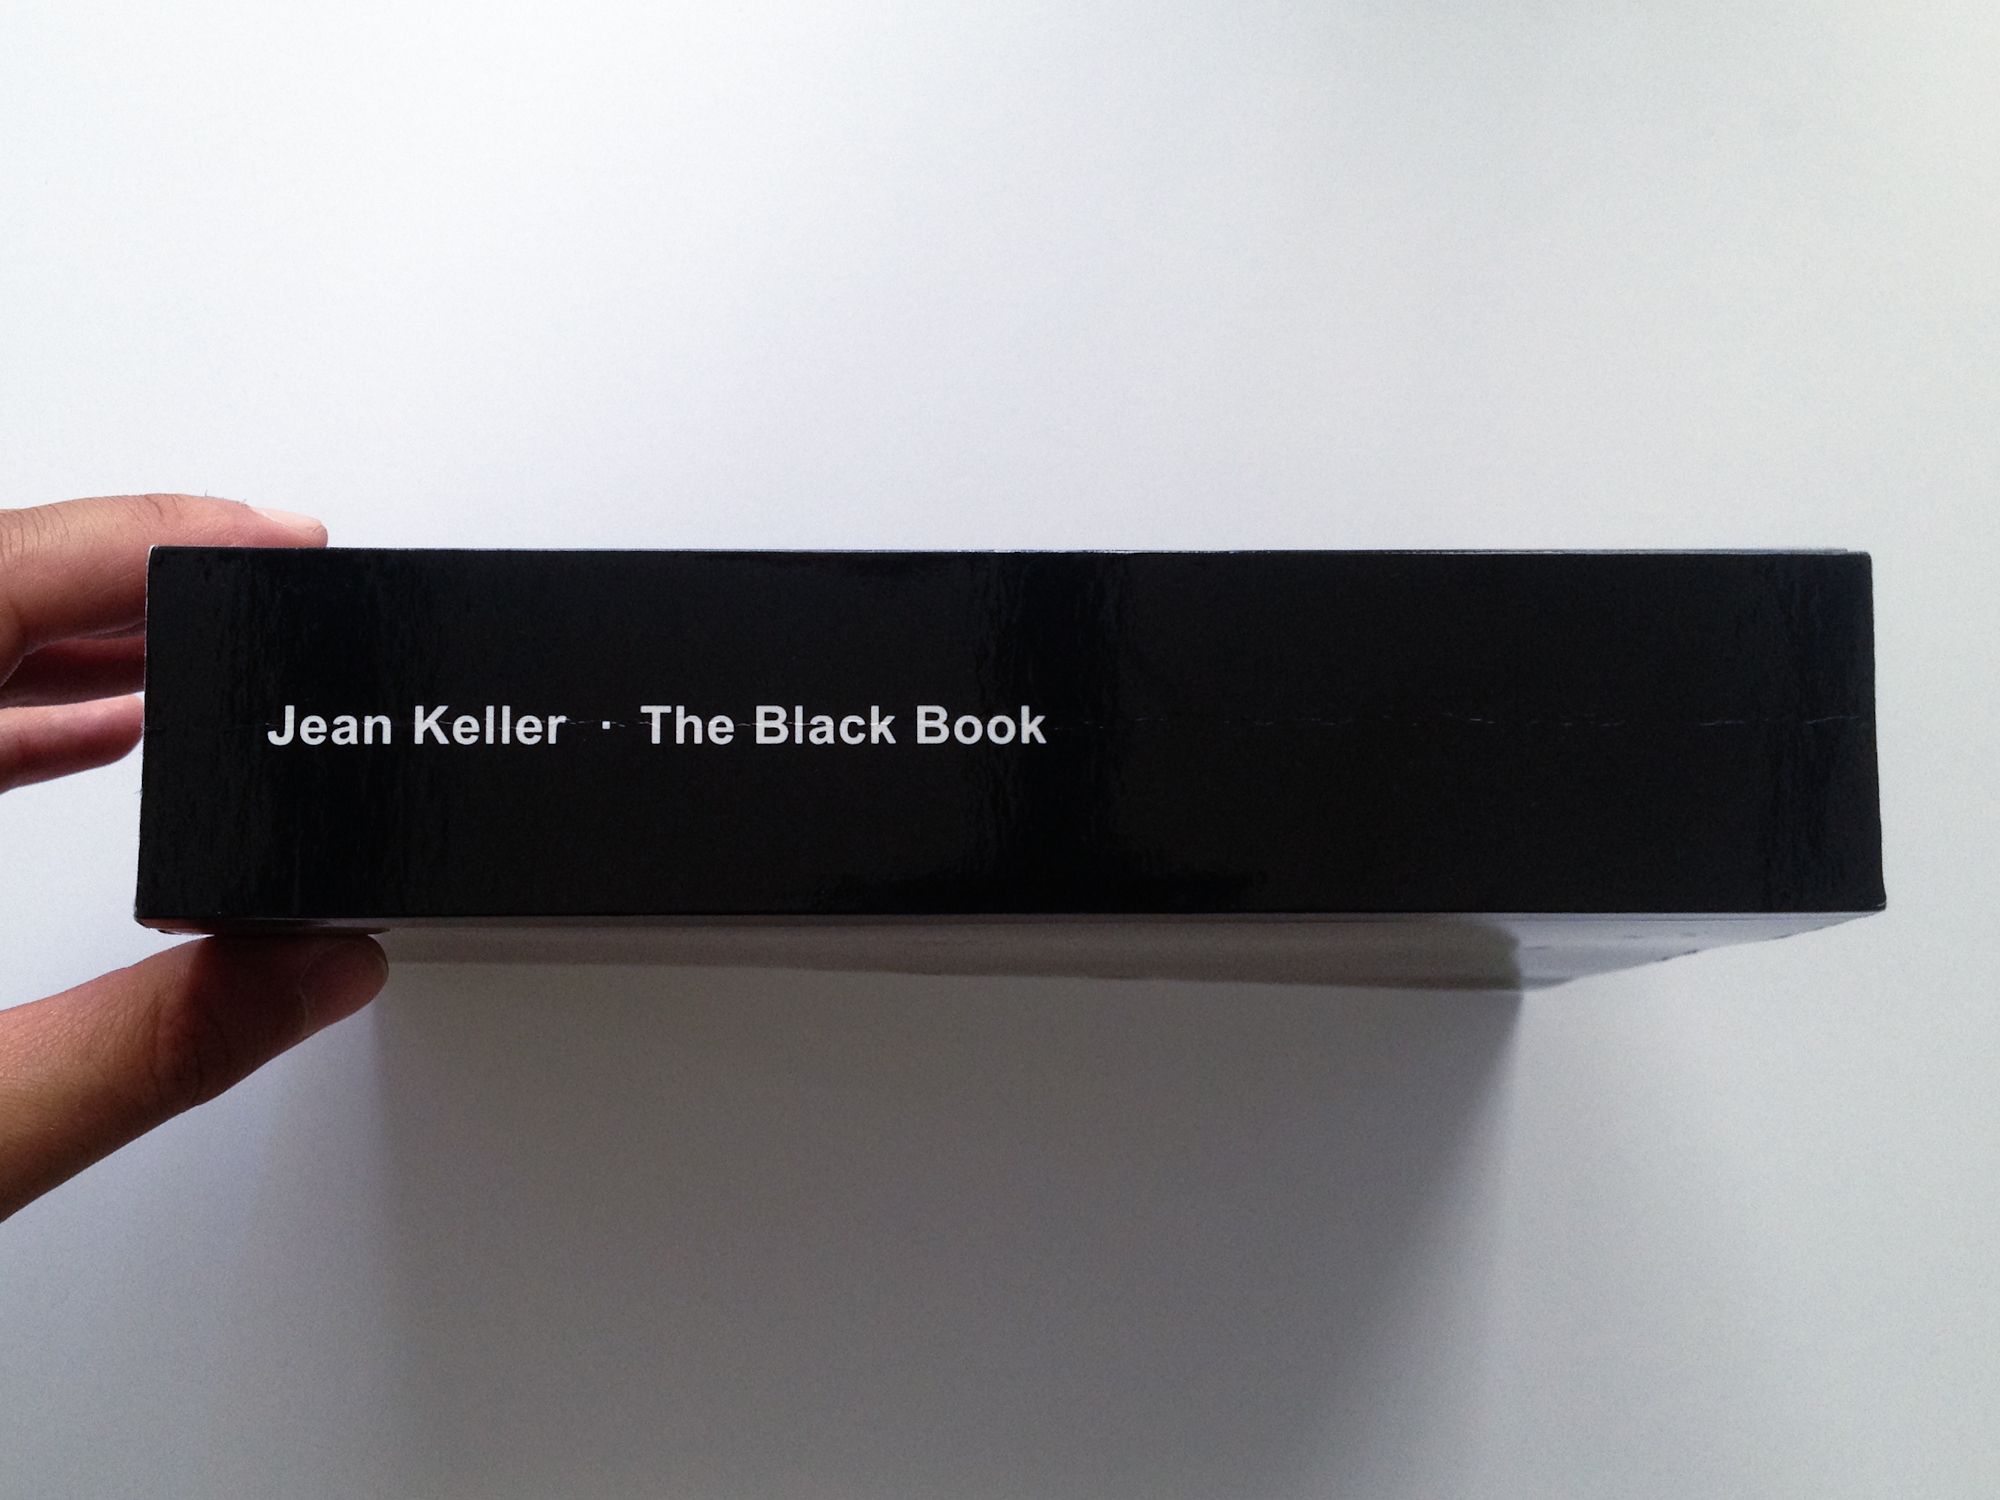 2 Jean Keller, The Black Book (Lulu/self-published, 2013).